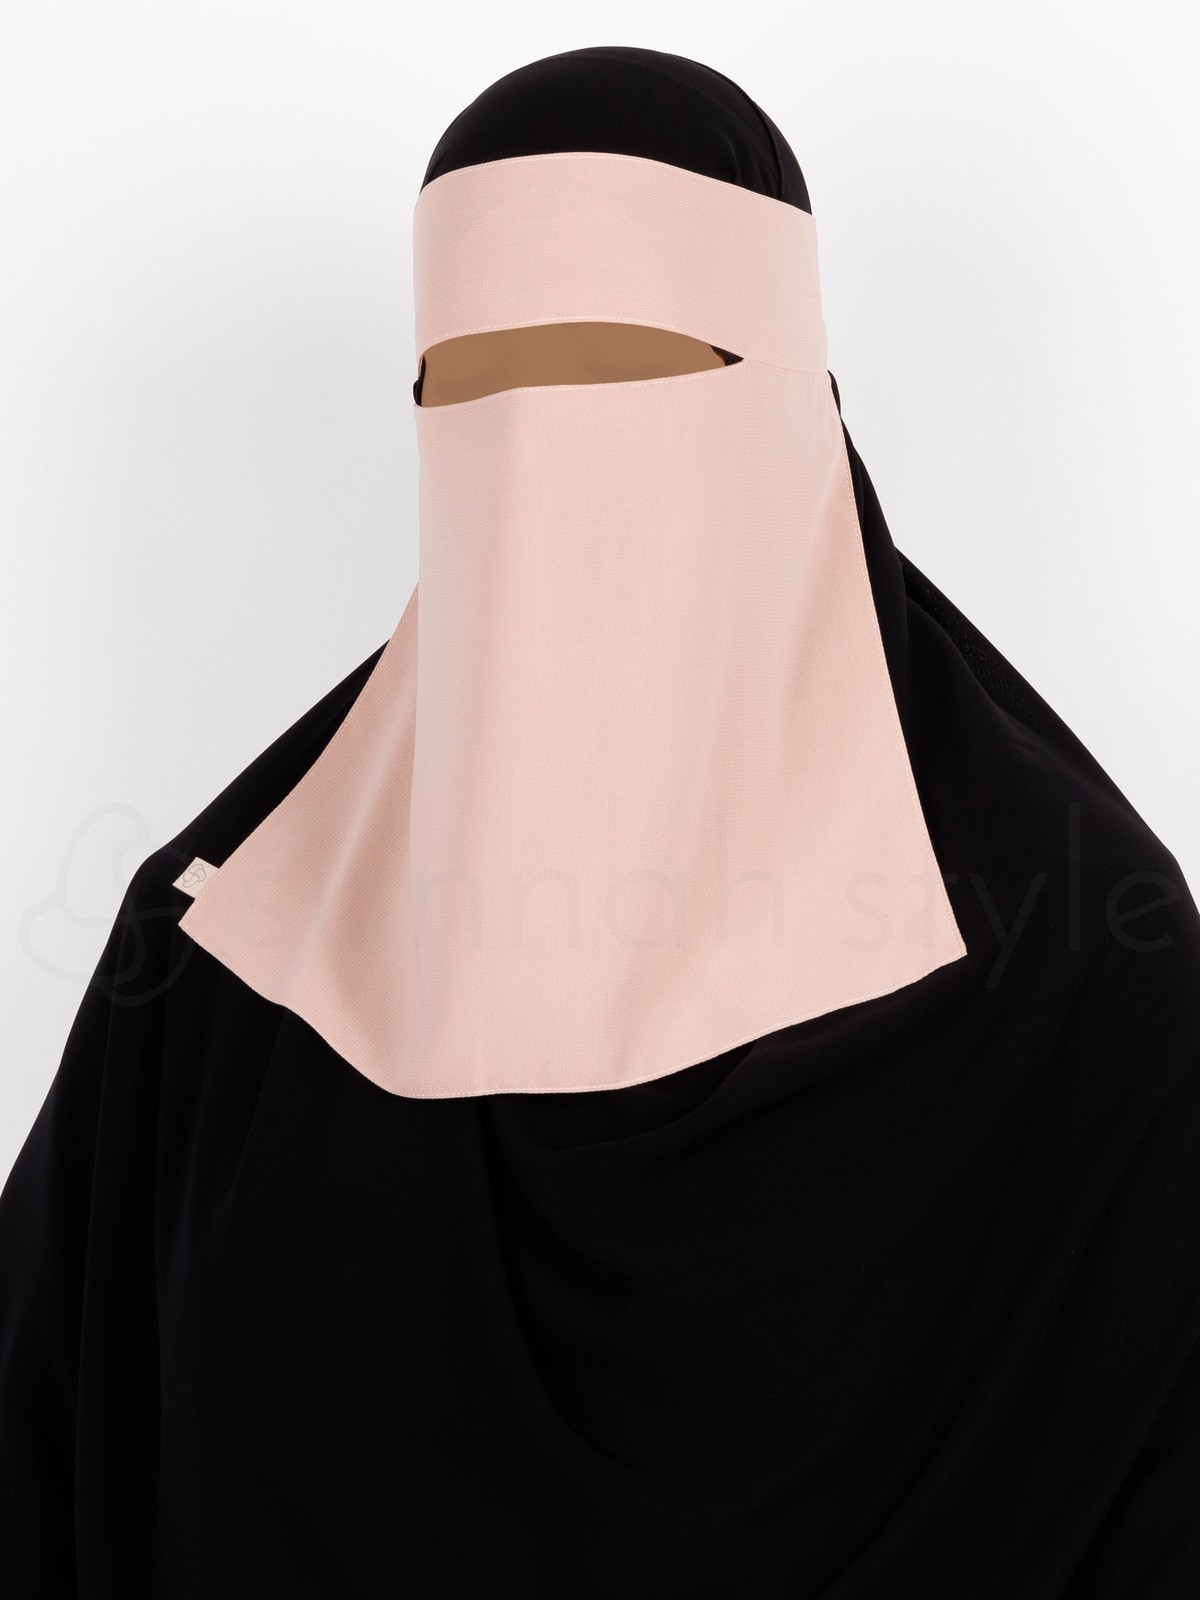 Sunnah Style - Short One Layer Niqab (Parfait)